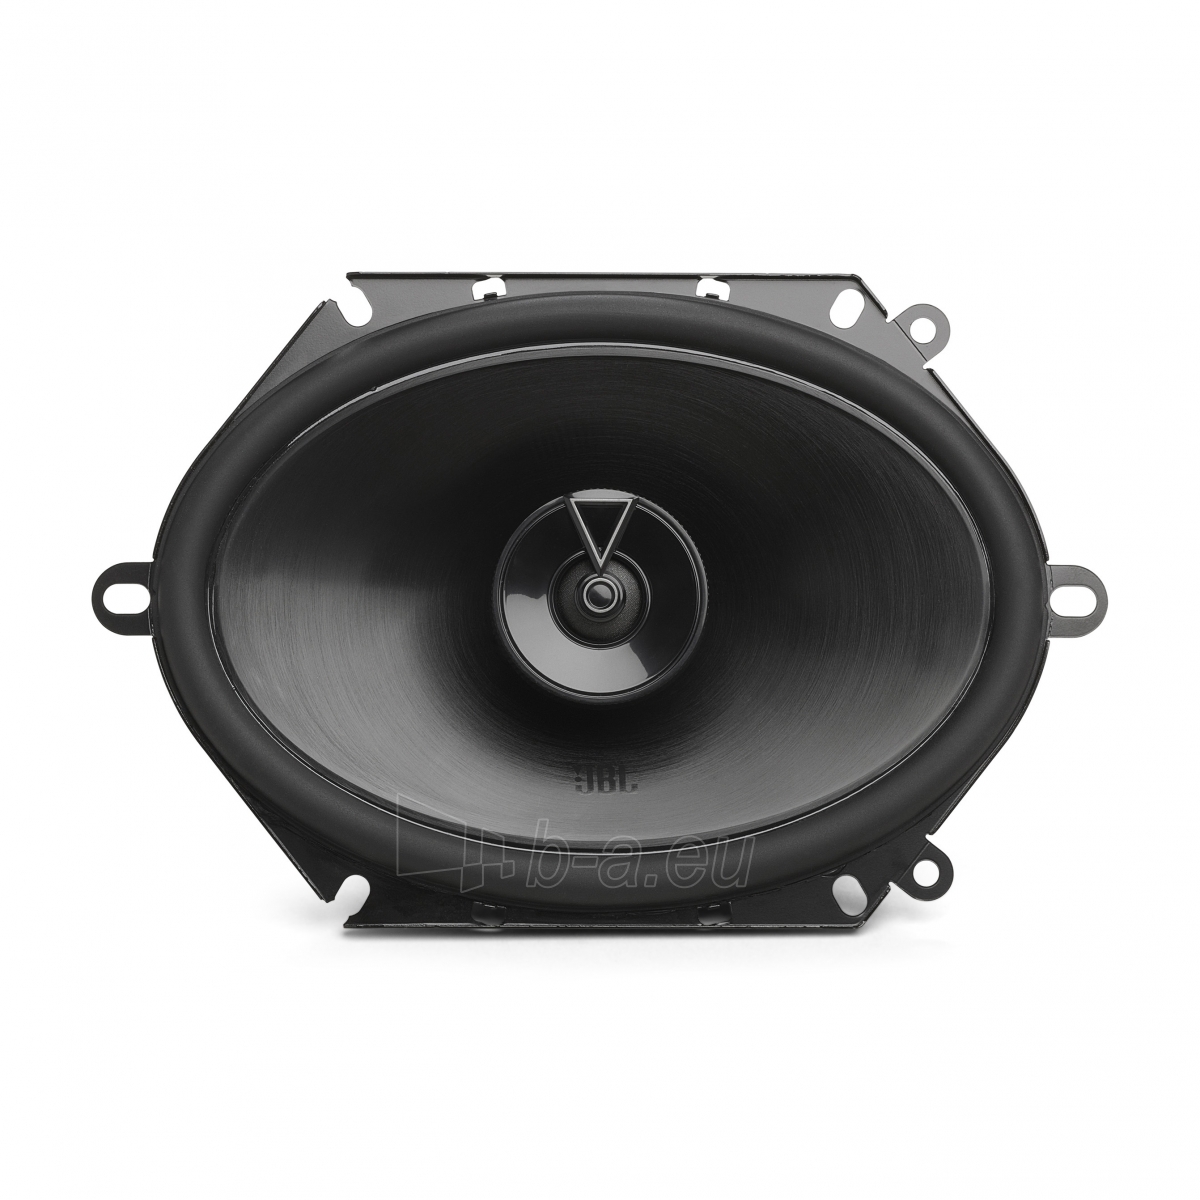 Autogarsiakalbiai JBL Club 864F 15,2cm x 20,3cm 2-Way Coaxial Car Speaker paveikslėlis 7 iš 10